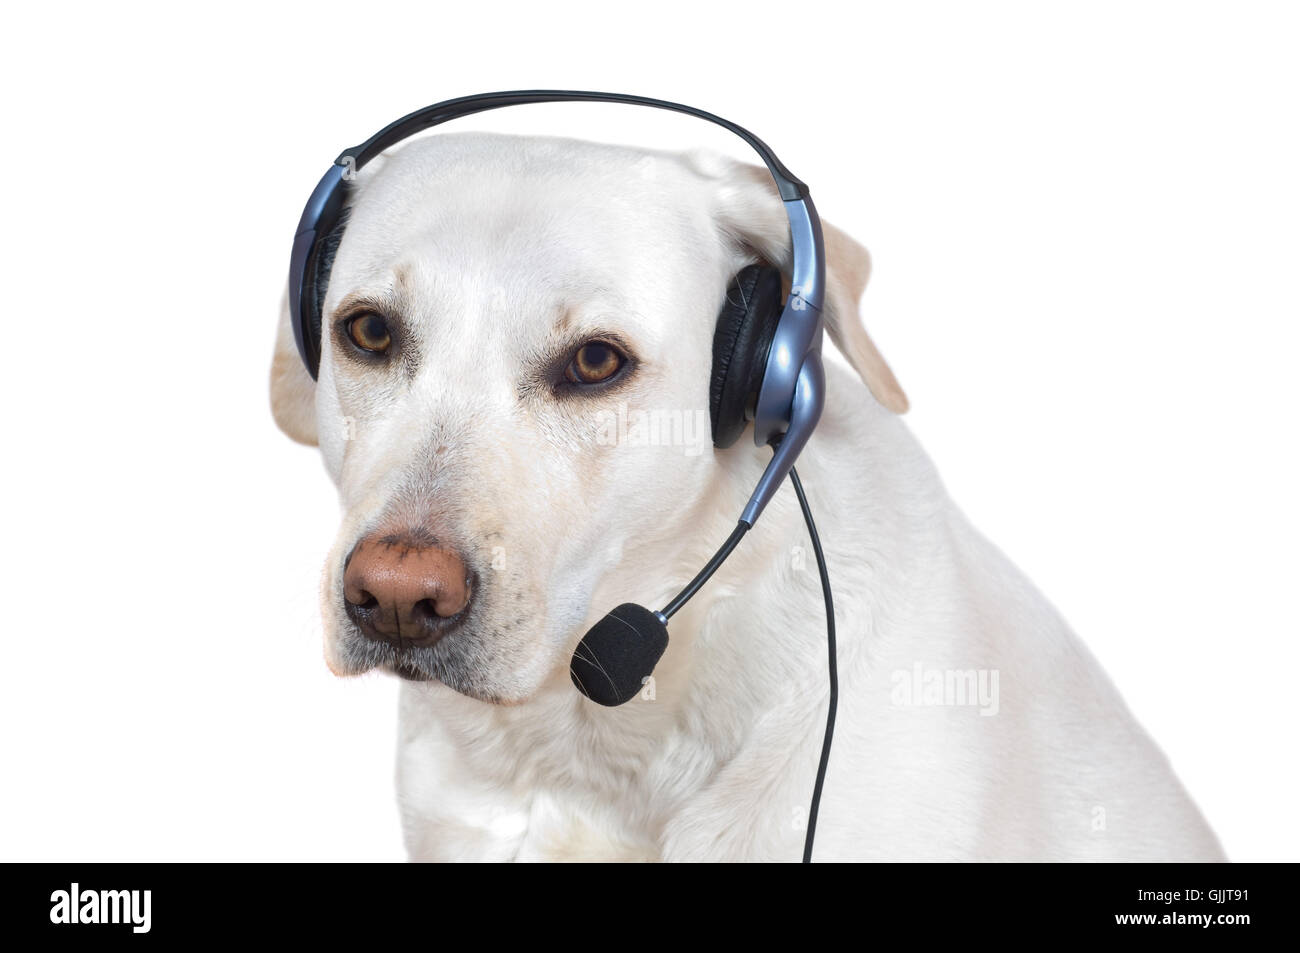 dog headset microphone Stock Photo - Alamy